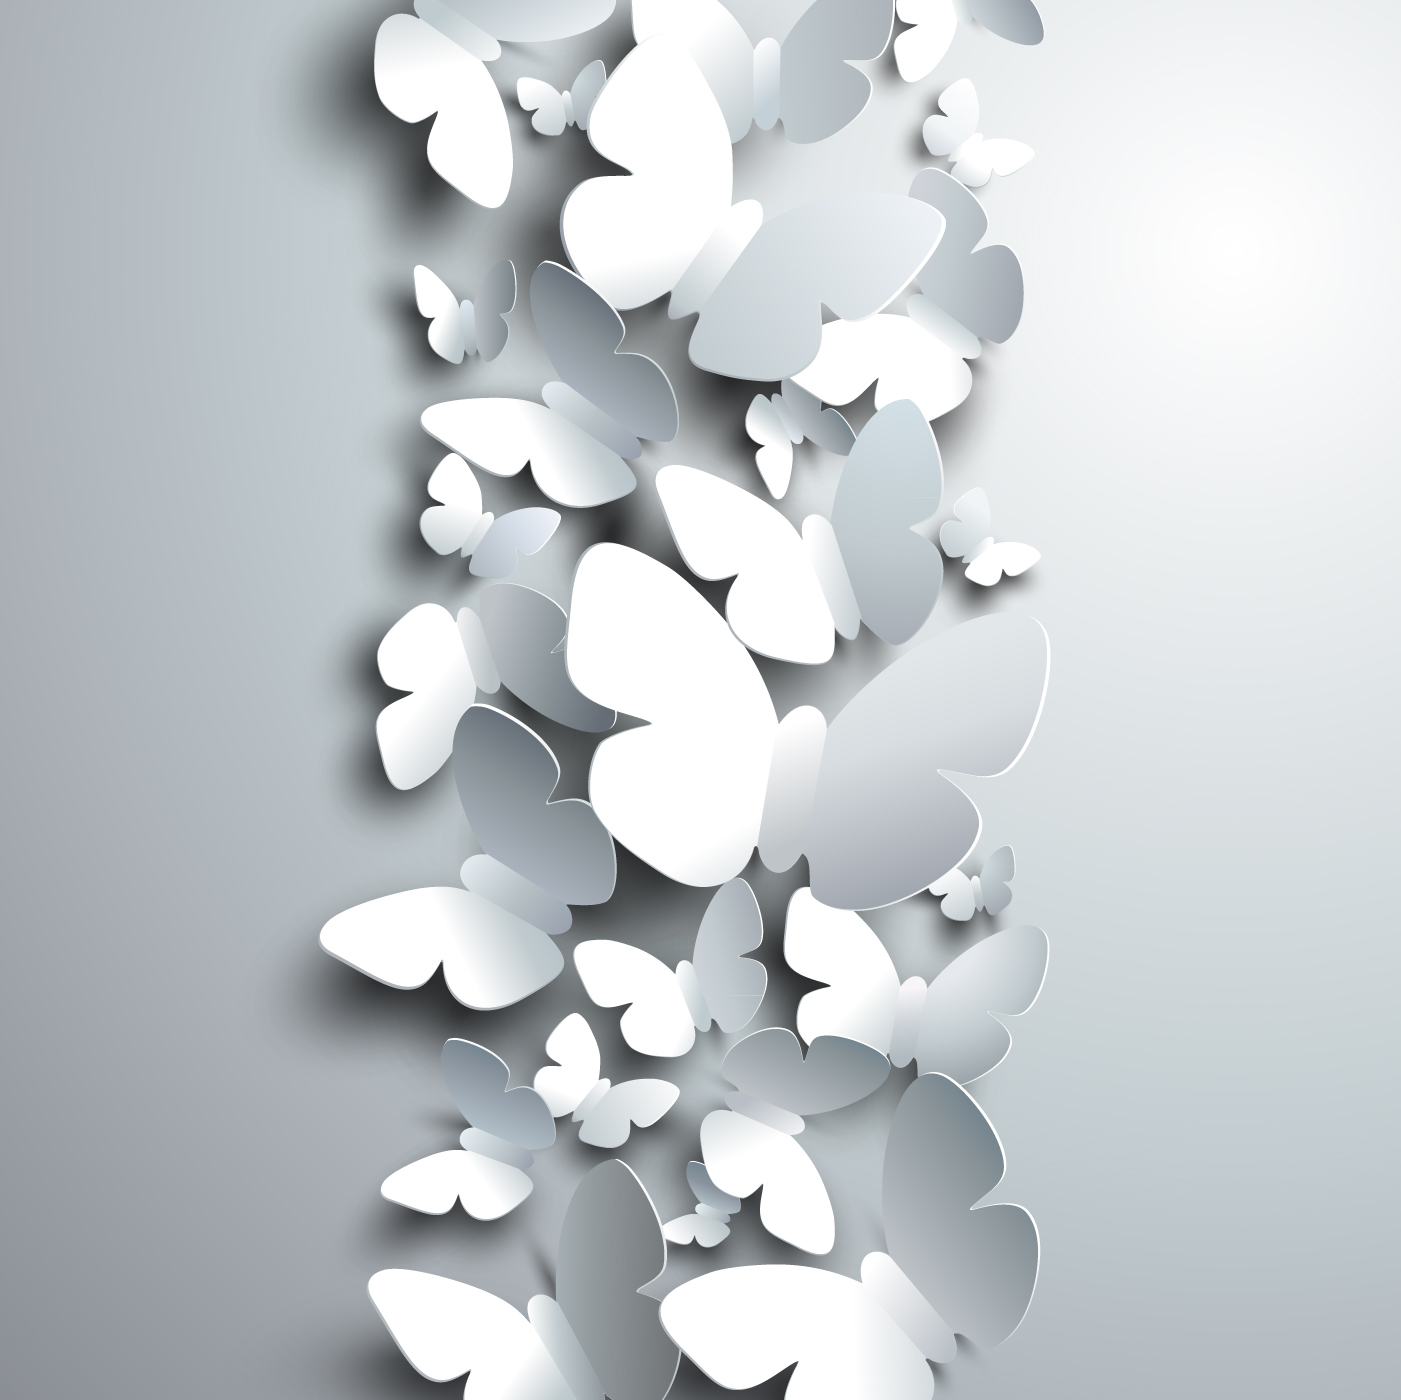 Paper butterflies vector backgrounds 03